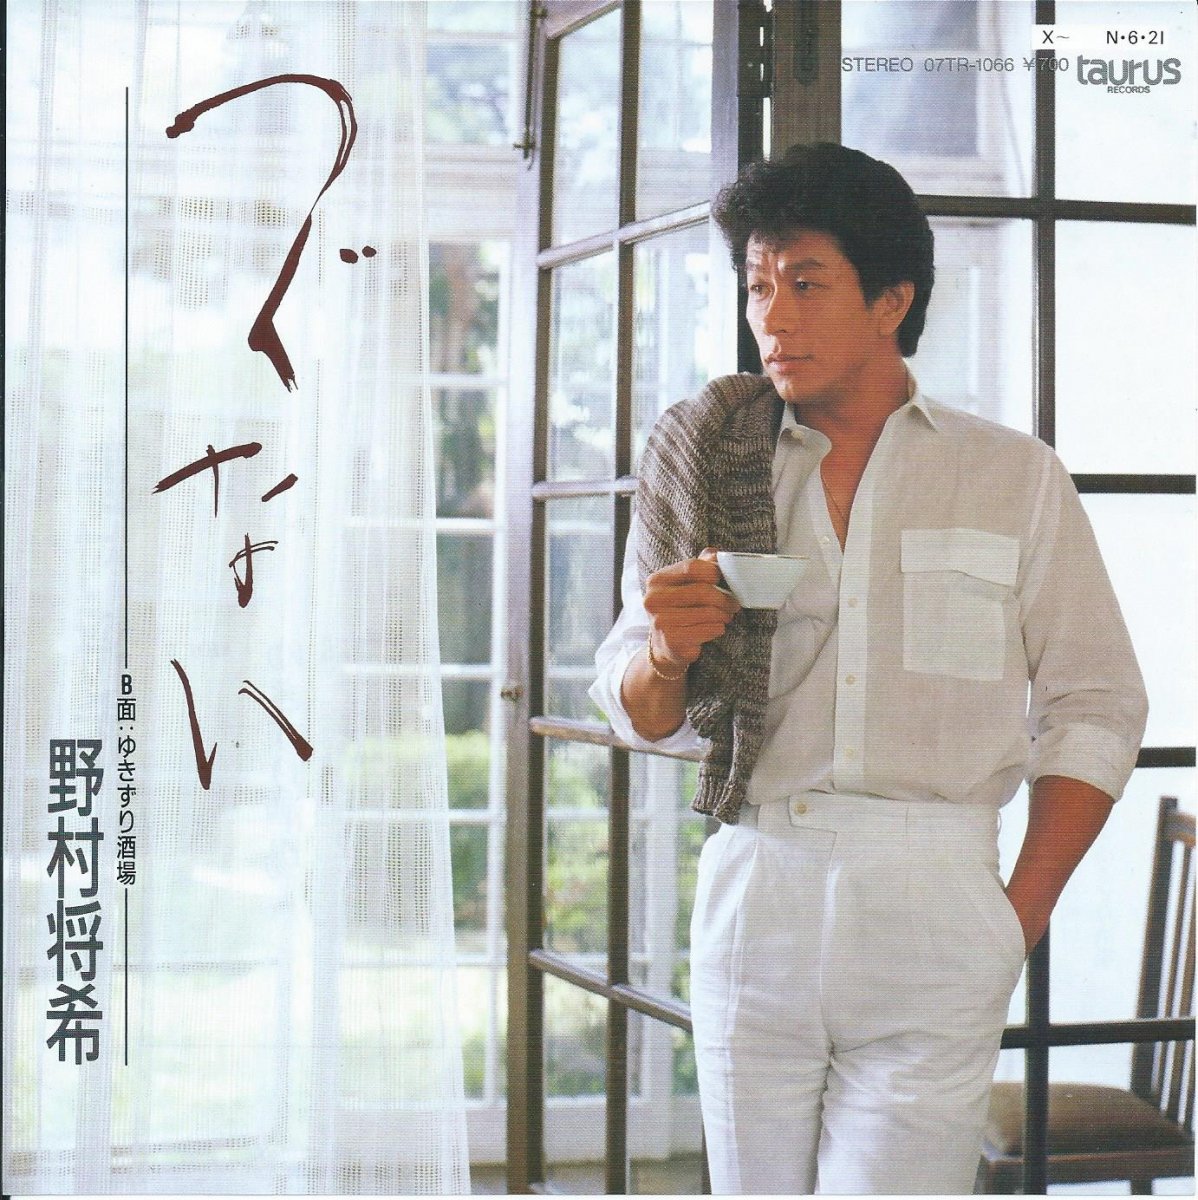 SHOWA SONG / 昭和歌謡 - HIP TANK RECORDS